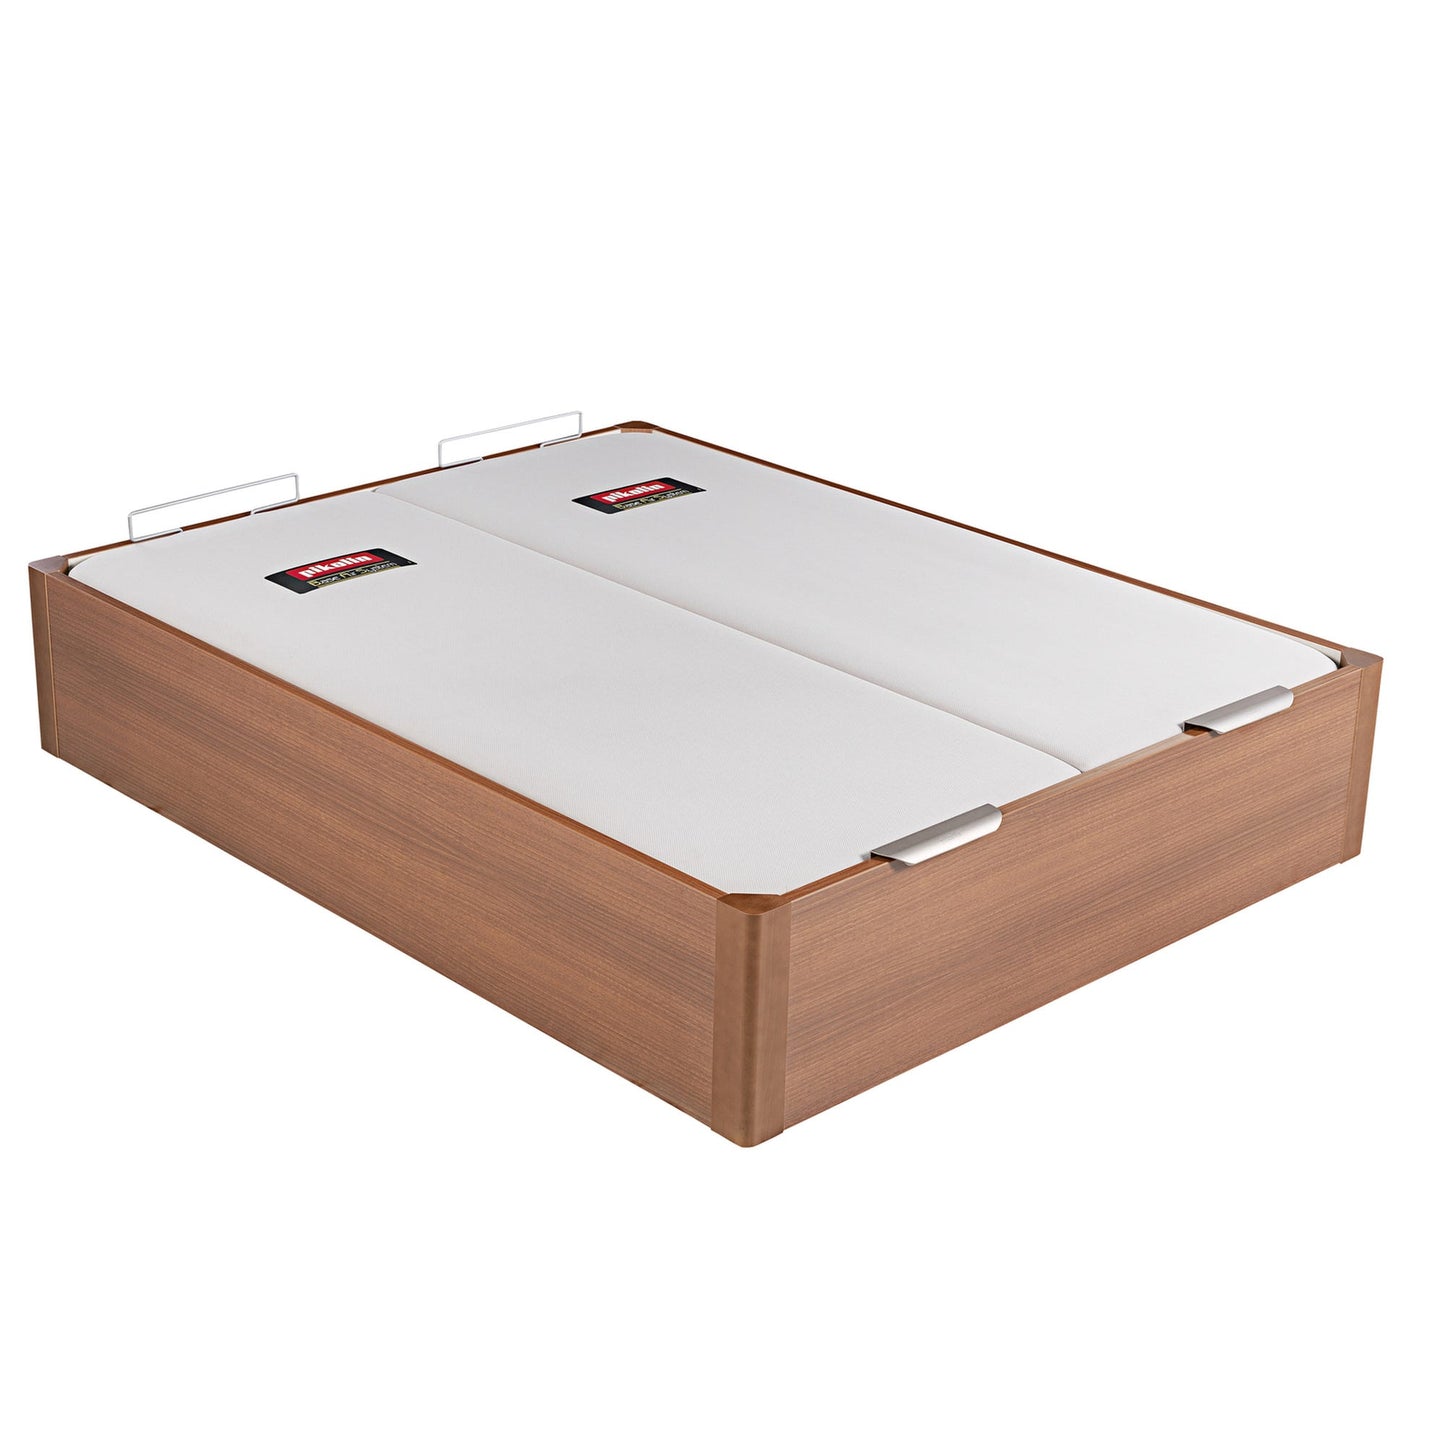 Canapé abatible de madera de alta capacidad tapa doble de color cerezo - DESIGN - 200x200